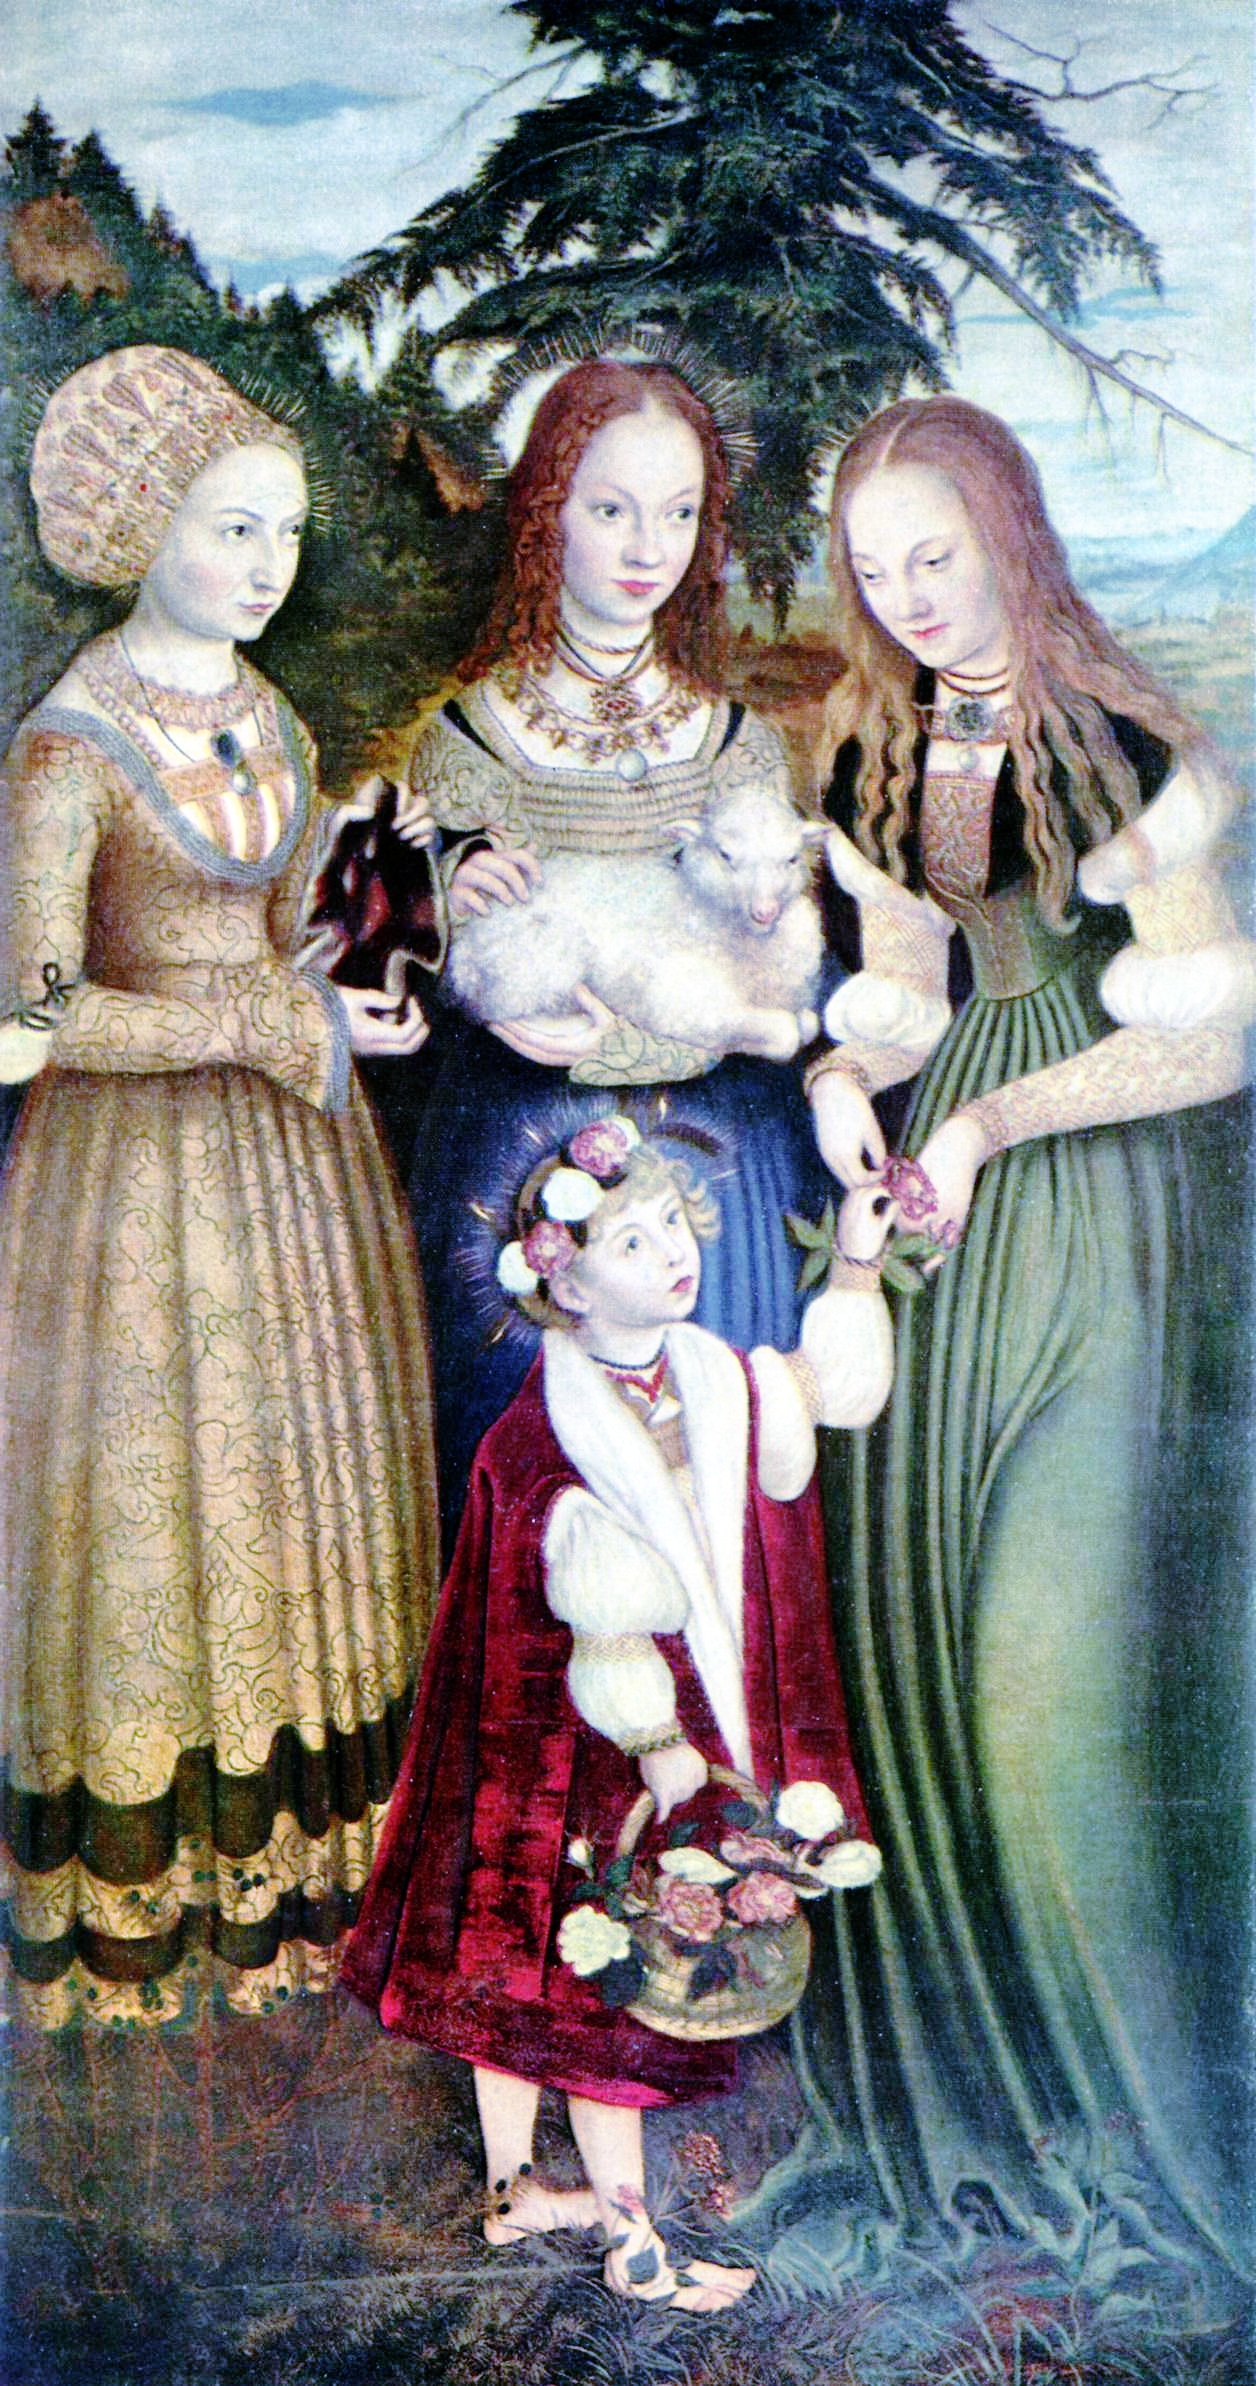 a Thessara Eldusaer painting of three women and a child